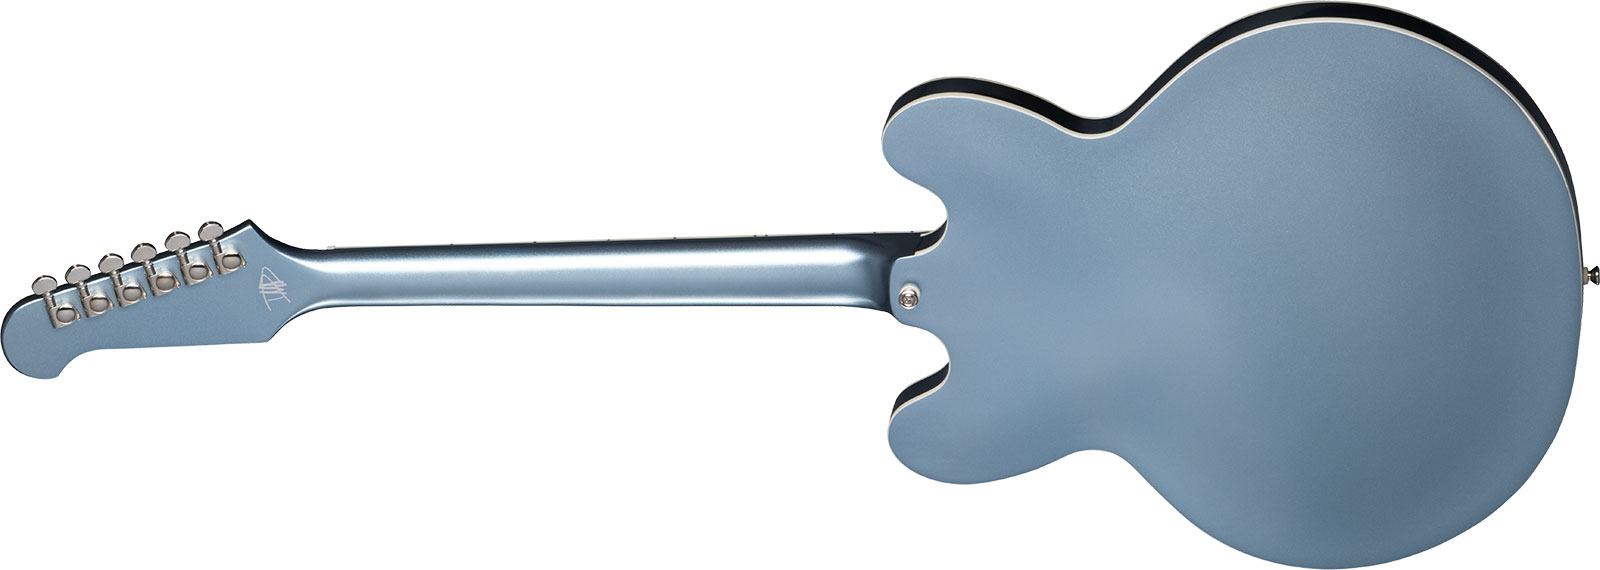 Epiphone Dave Grohl Dg-335 Signature 2h Ht Lau - Pelham Blue - Semi-hollow electric guitar - Variation 1